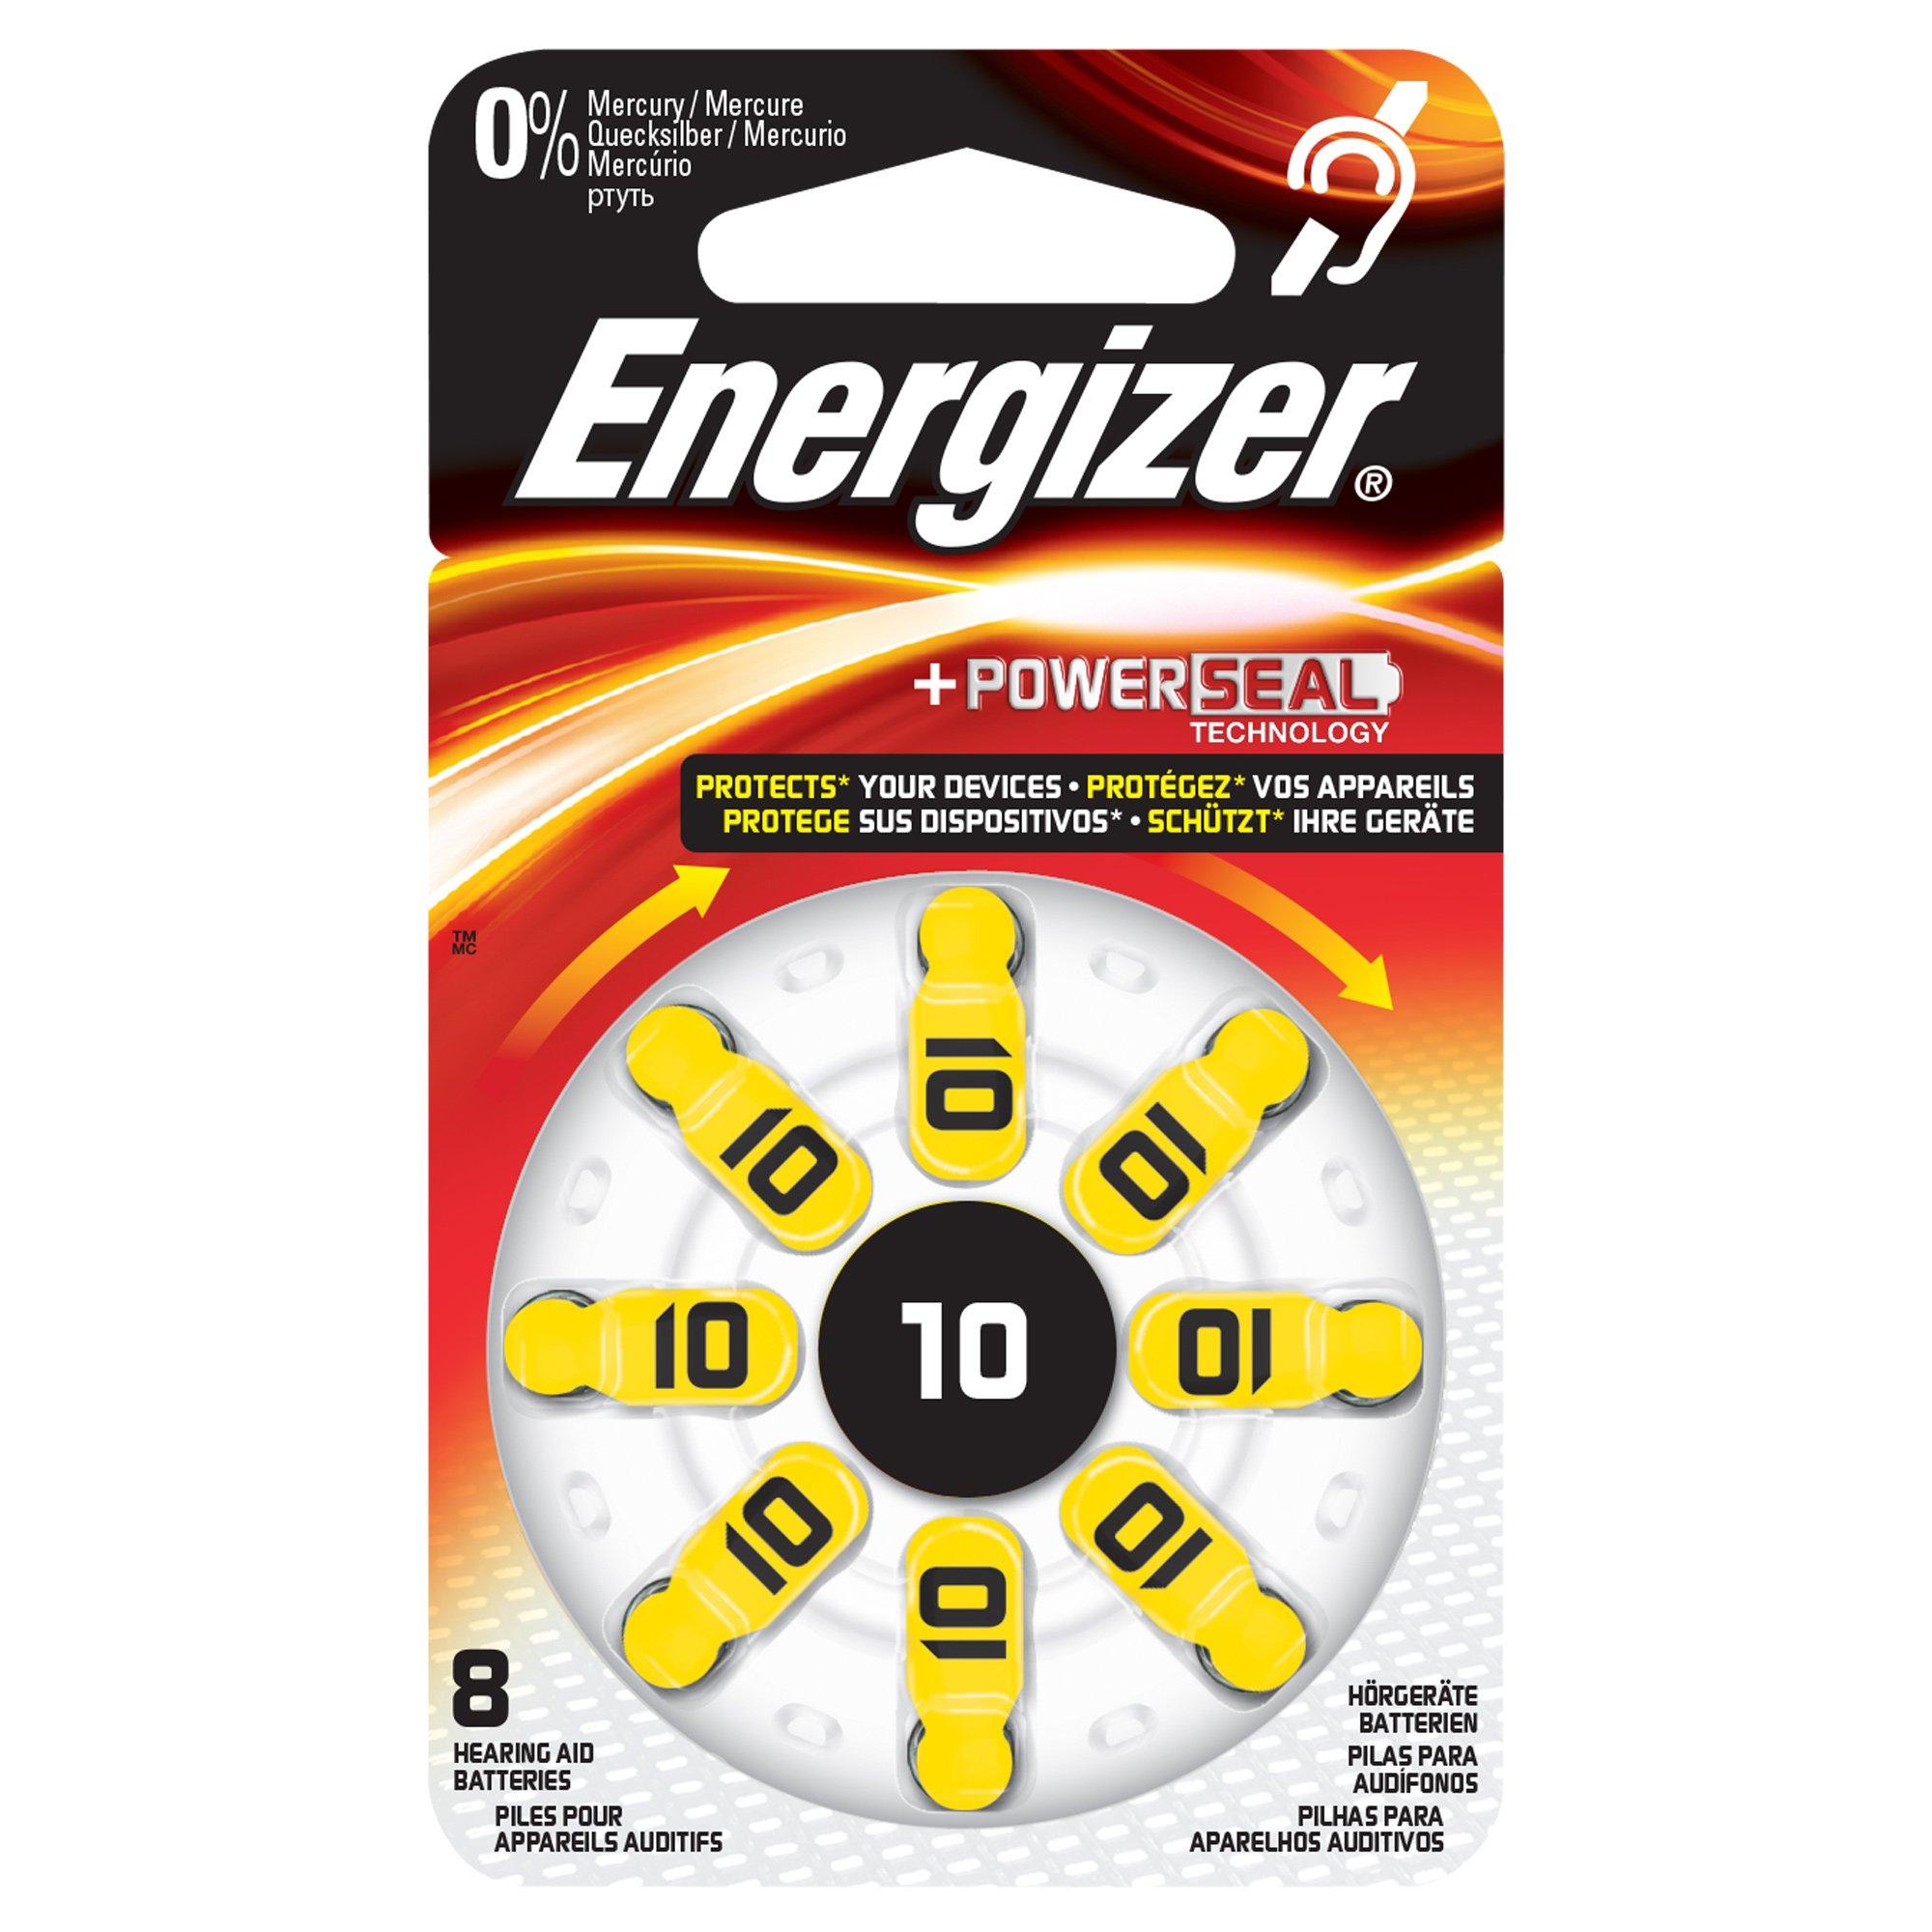 Energizer 10-8 [-]10 10-8 